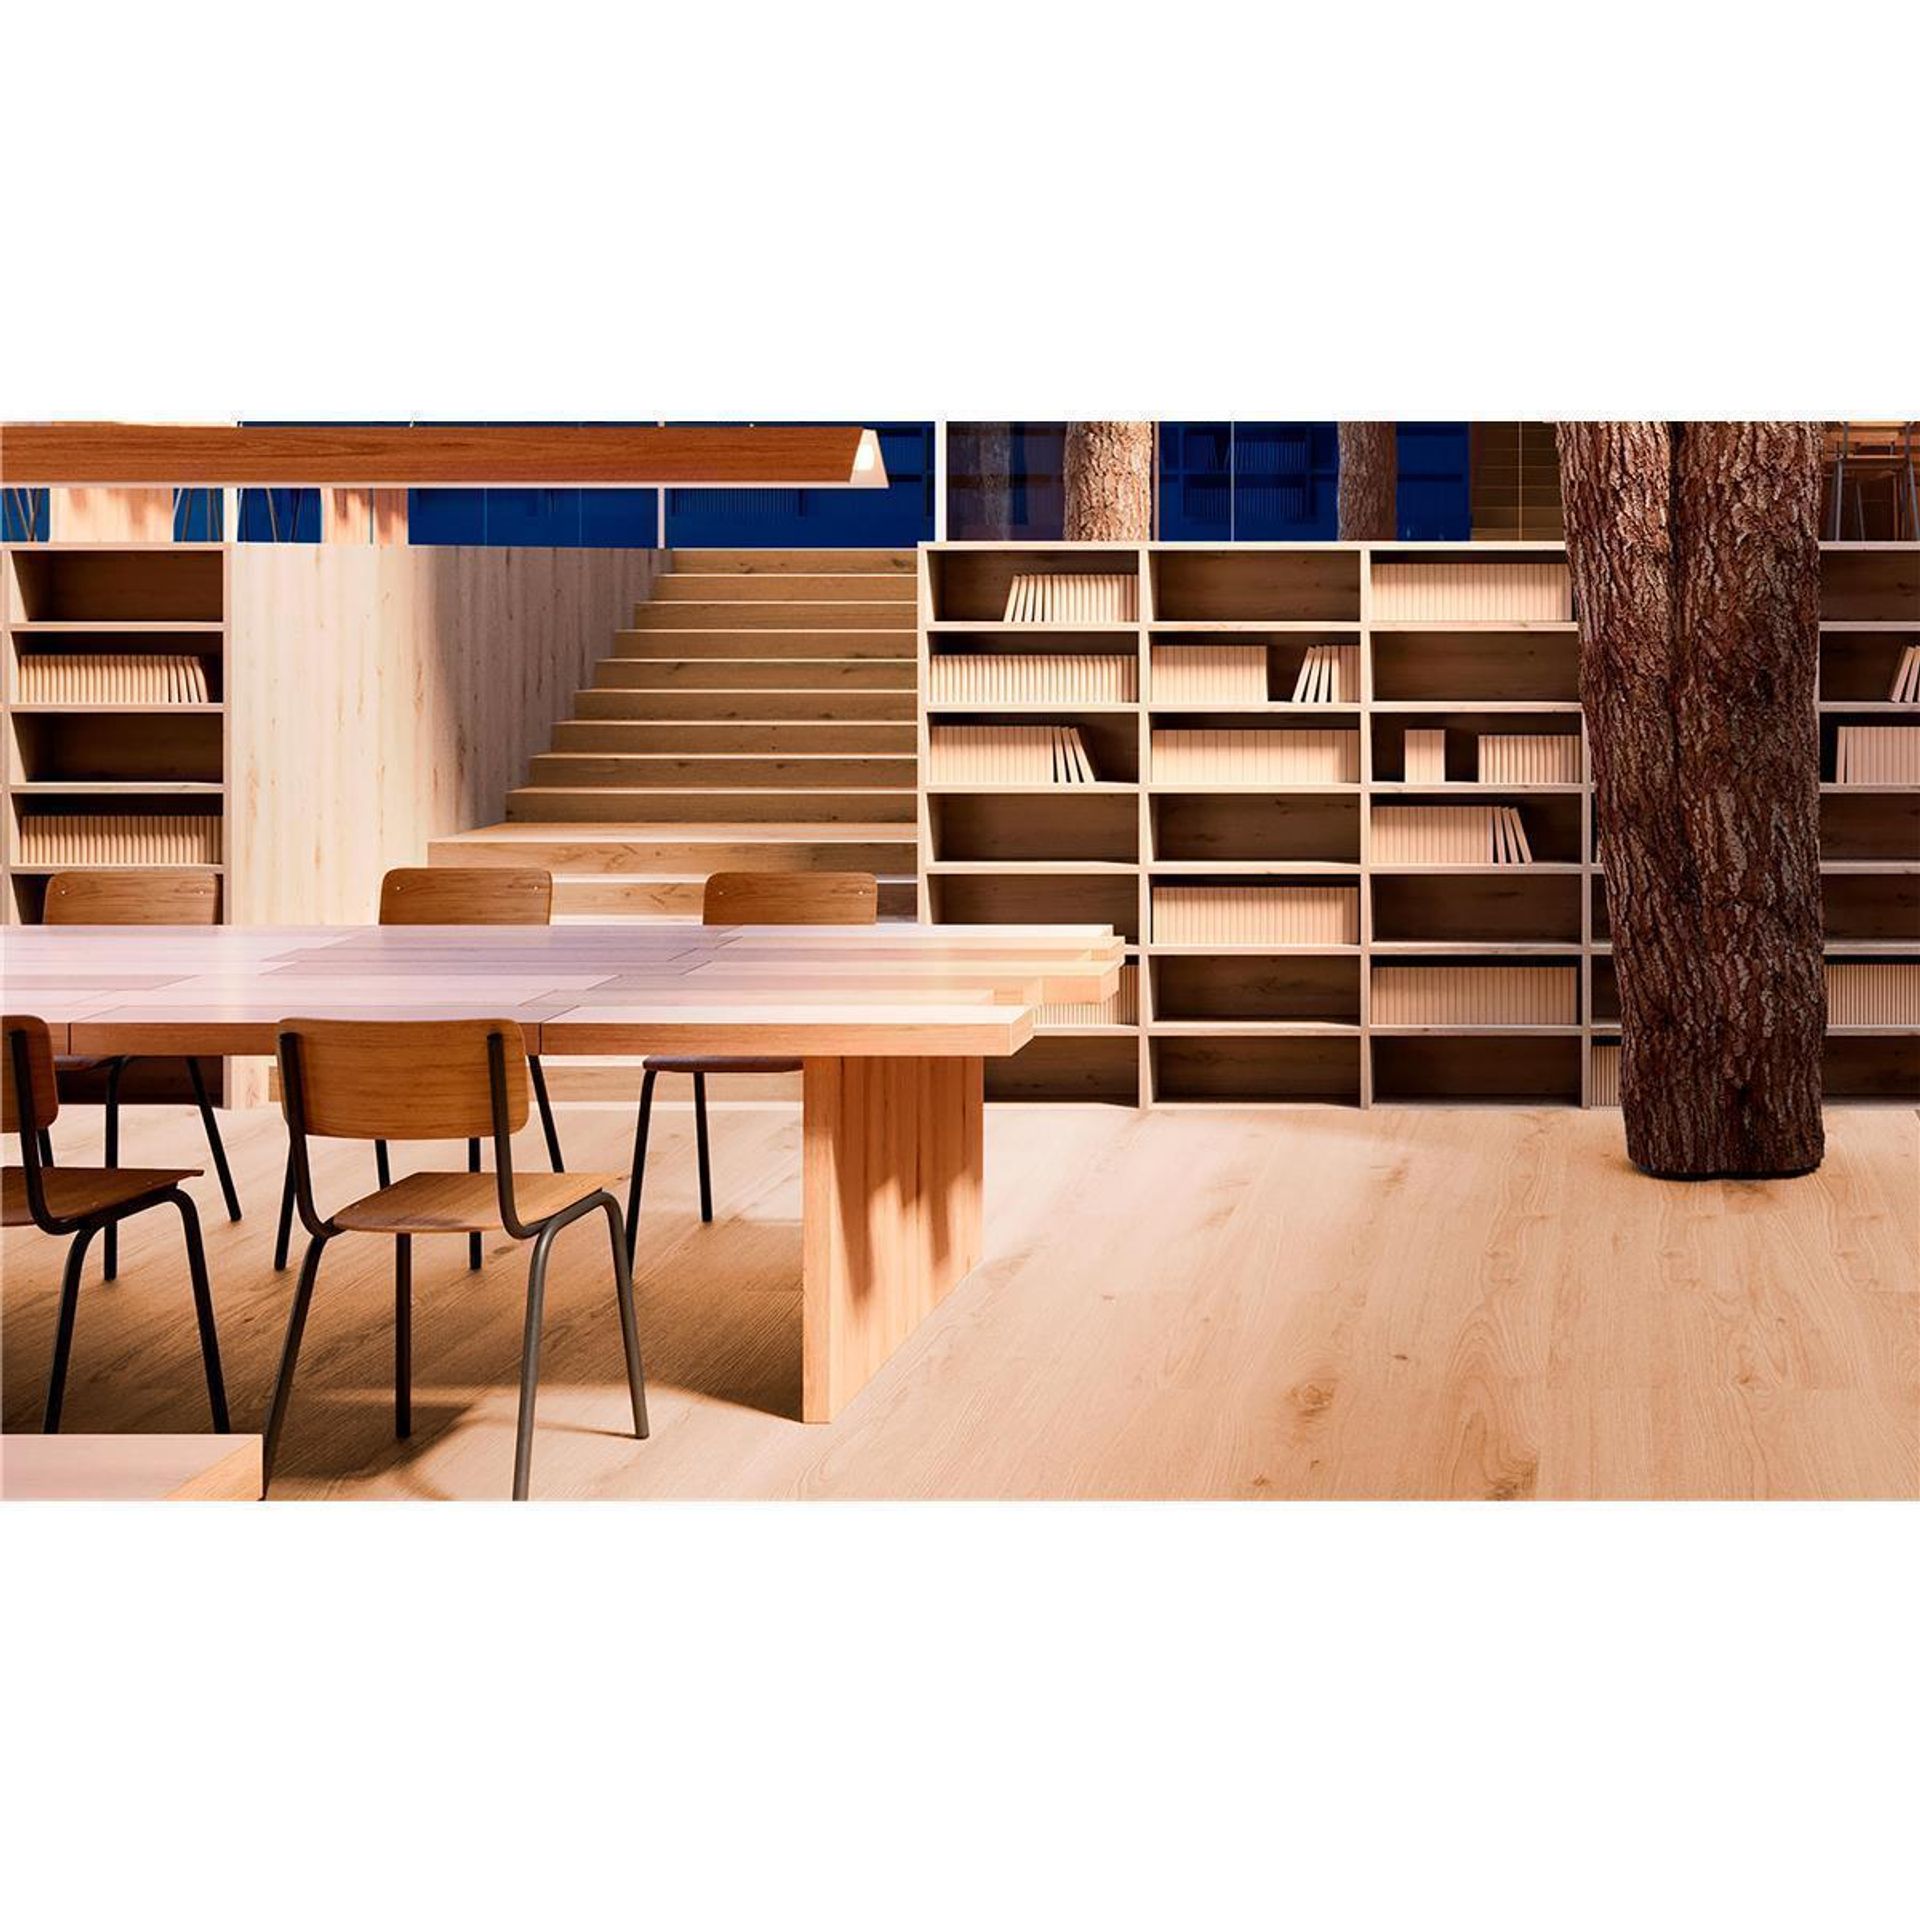 Designboden CLASSICS-English Oak-Grege Planke 121,1 cm x 19,05 cm - Nutzschichtdicke 0,55 mm